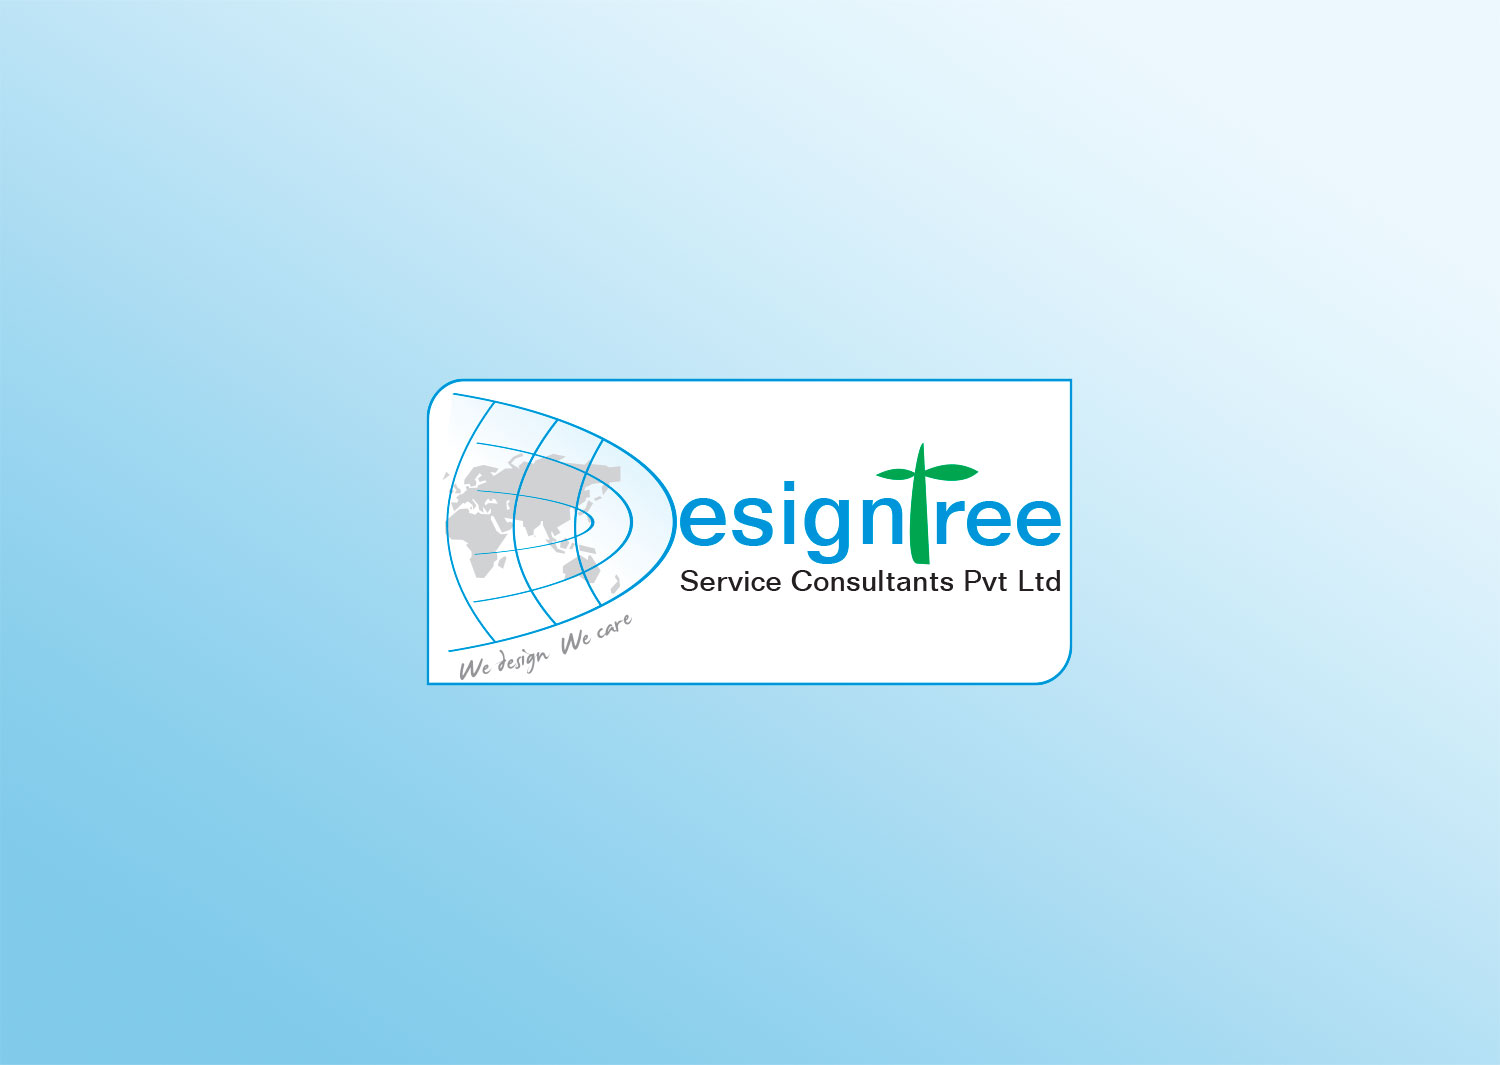 Designtree Service Consultants Pvt Ltd